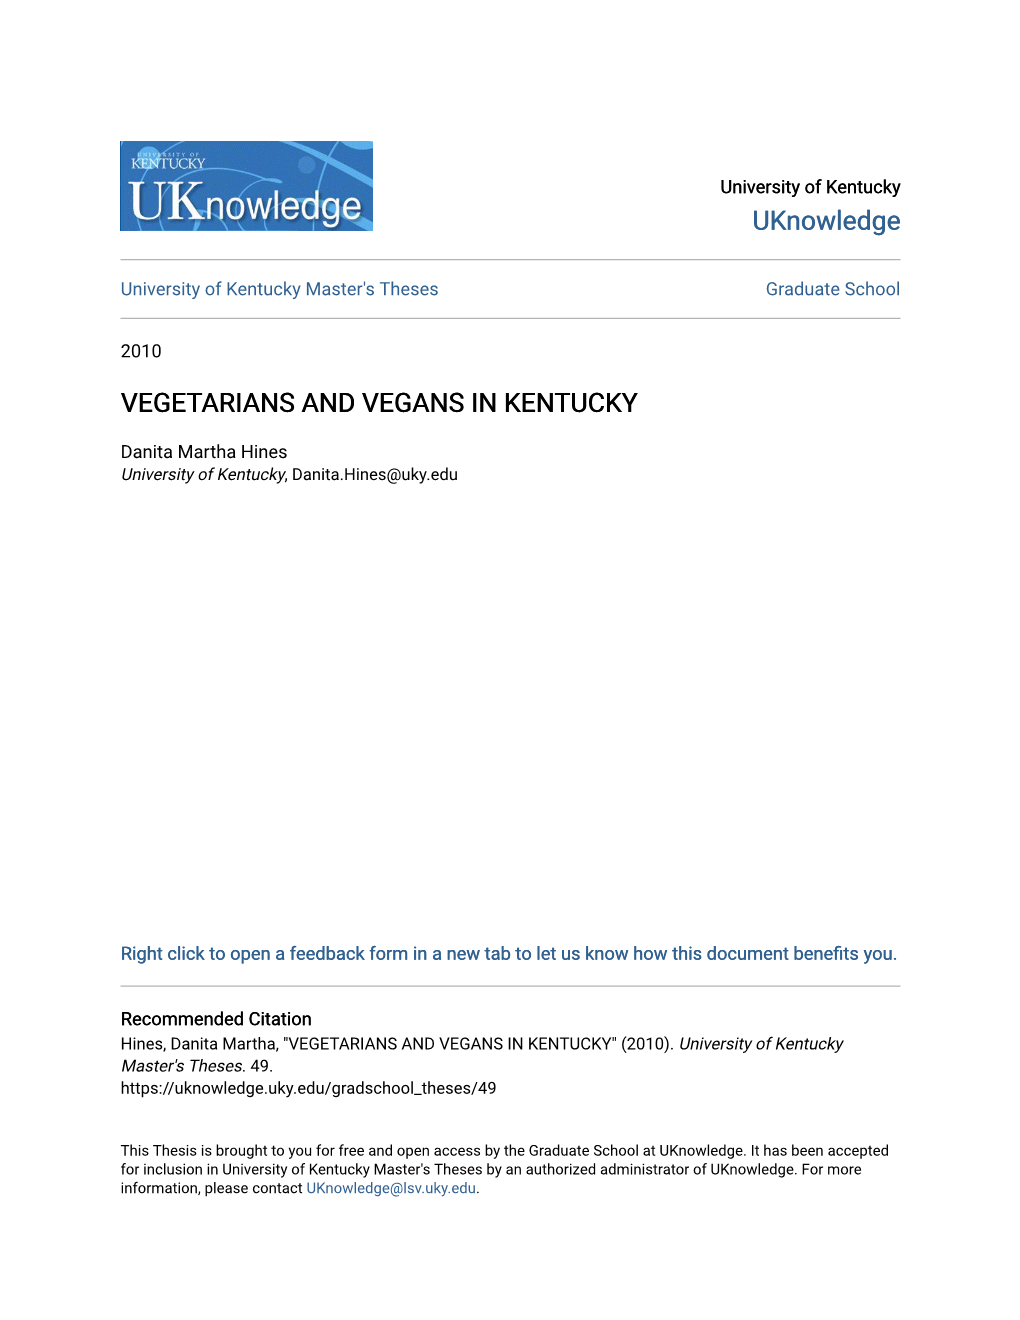 Vegetarians and Vegans in Kentucky